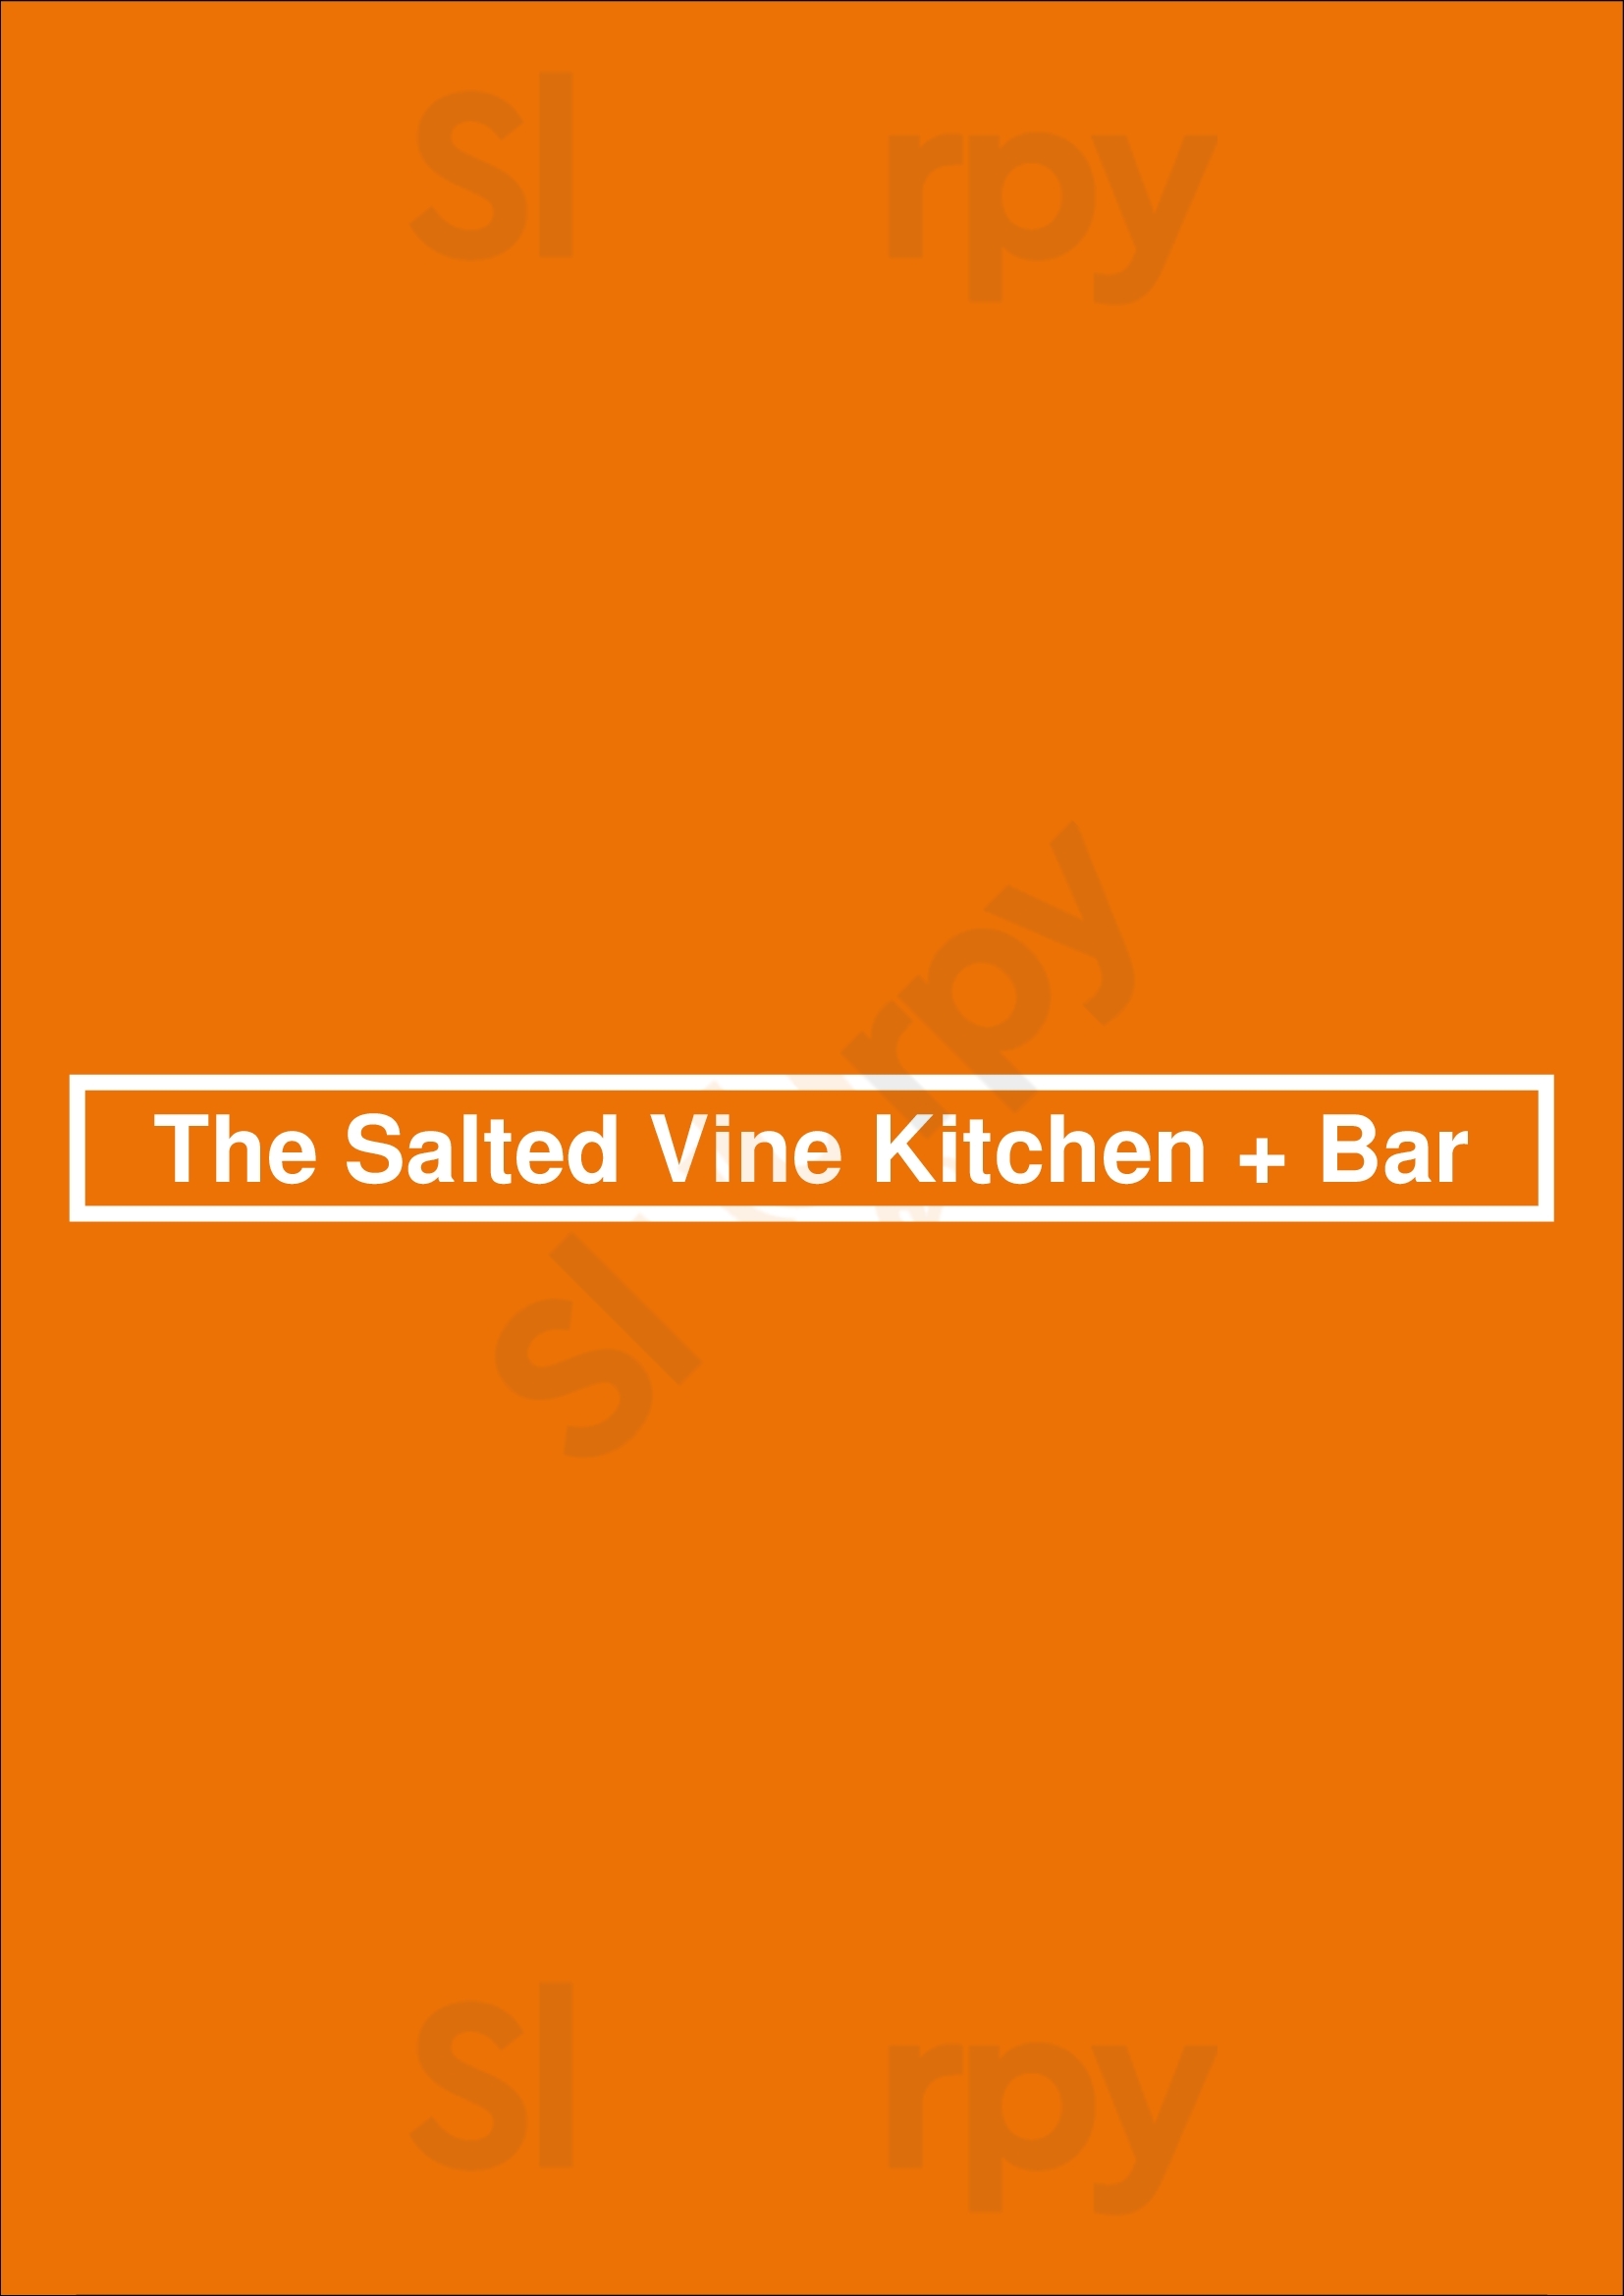 The Salted Vine Kitchen + Bar Squamish Menu - 1